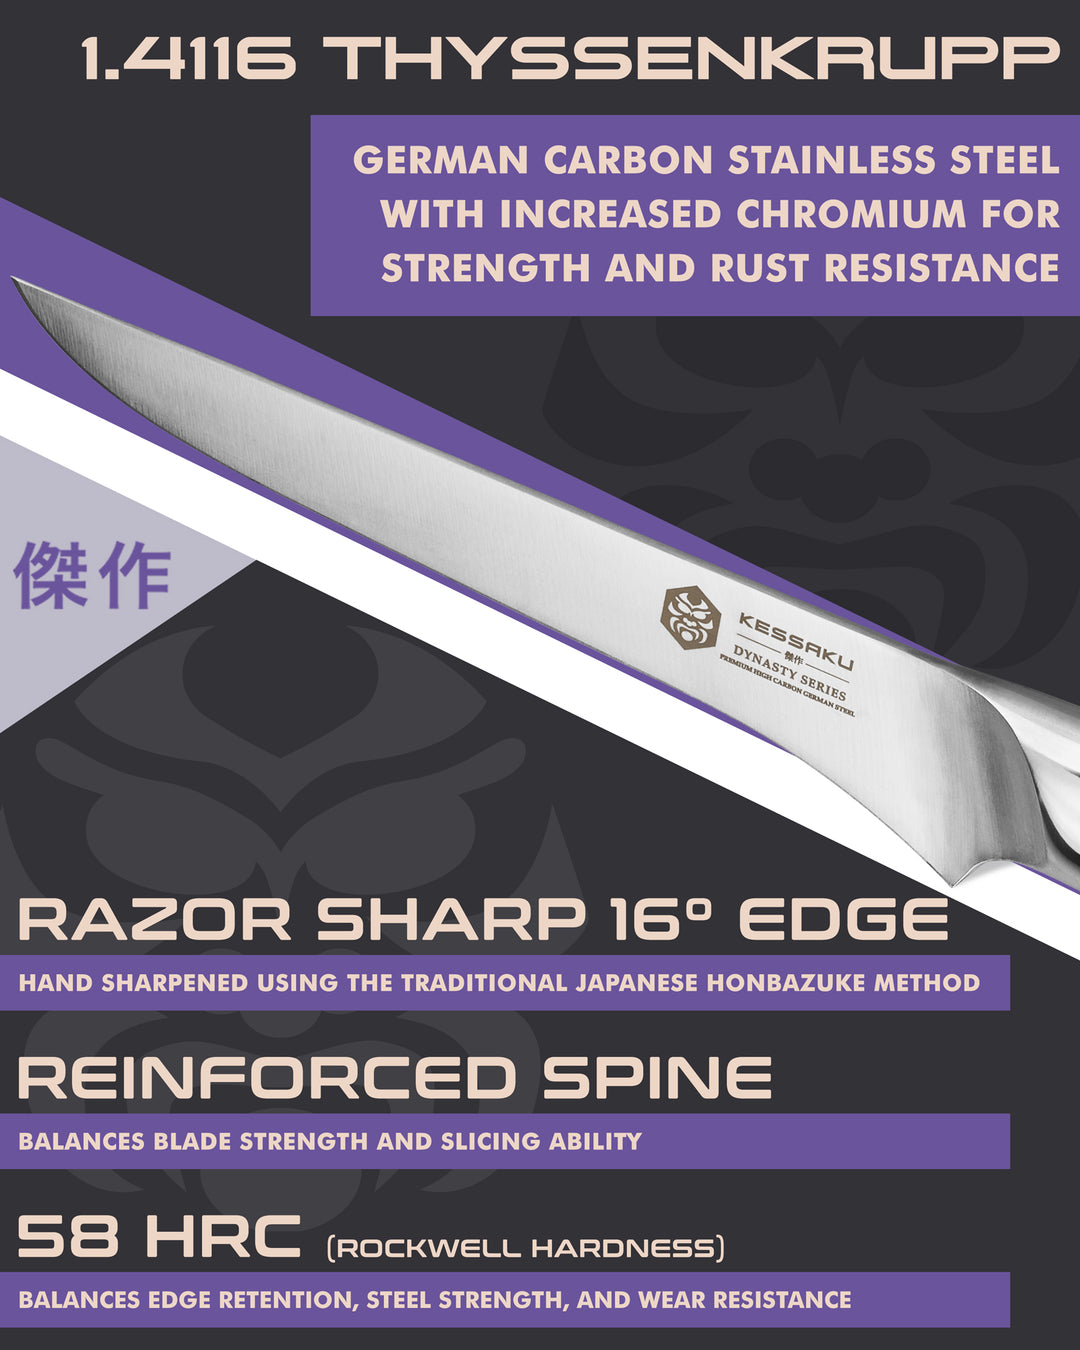 Kessaku Dynasty Boning Knife blade features: 1.4116 German steel, 58 HRC, sharpened to 16 degrees, reinforced spine